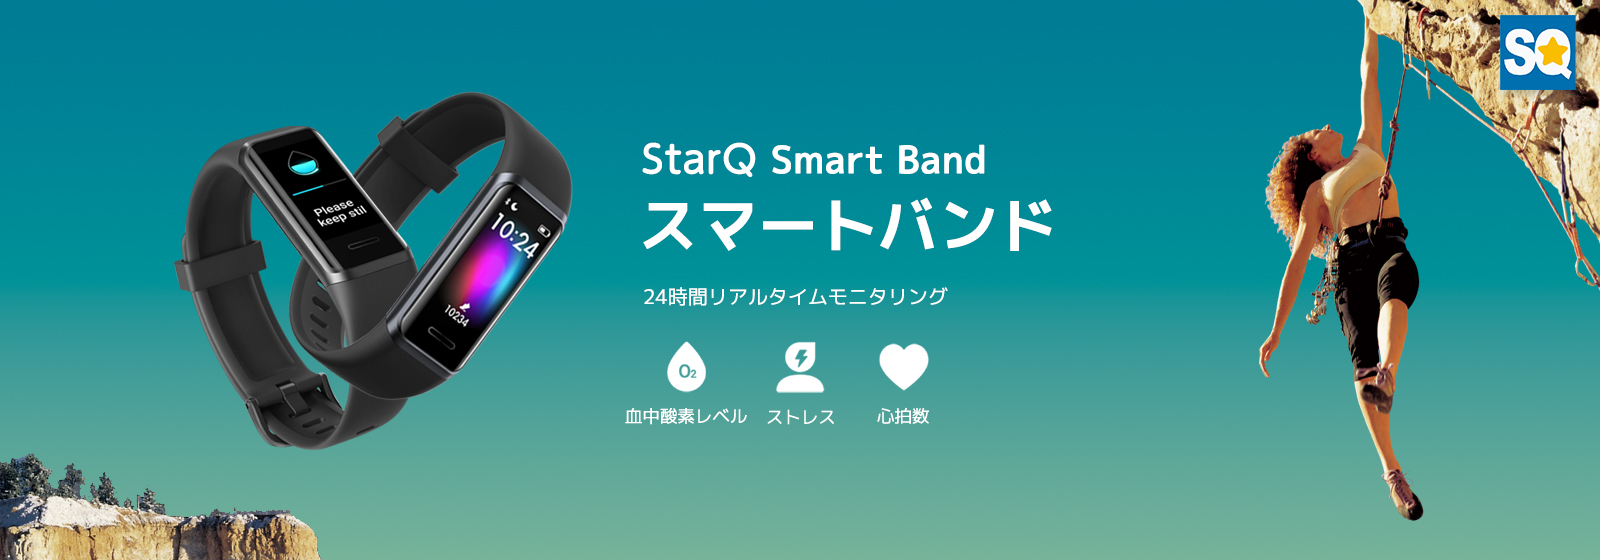 StarQ Band スマートバンド 